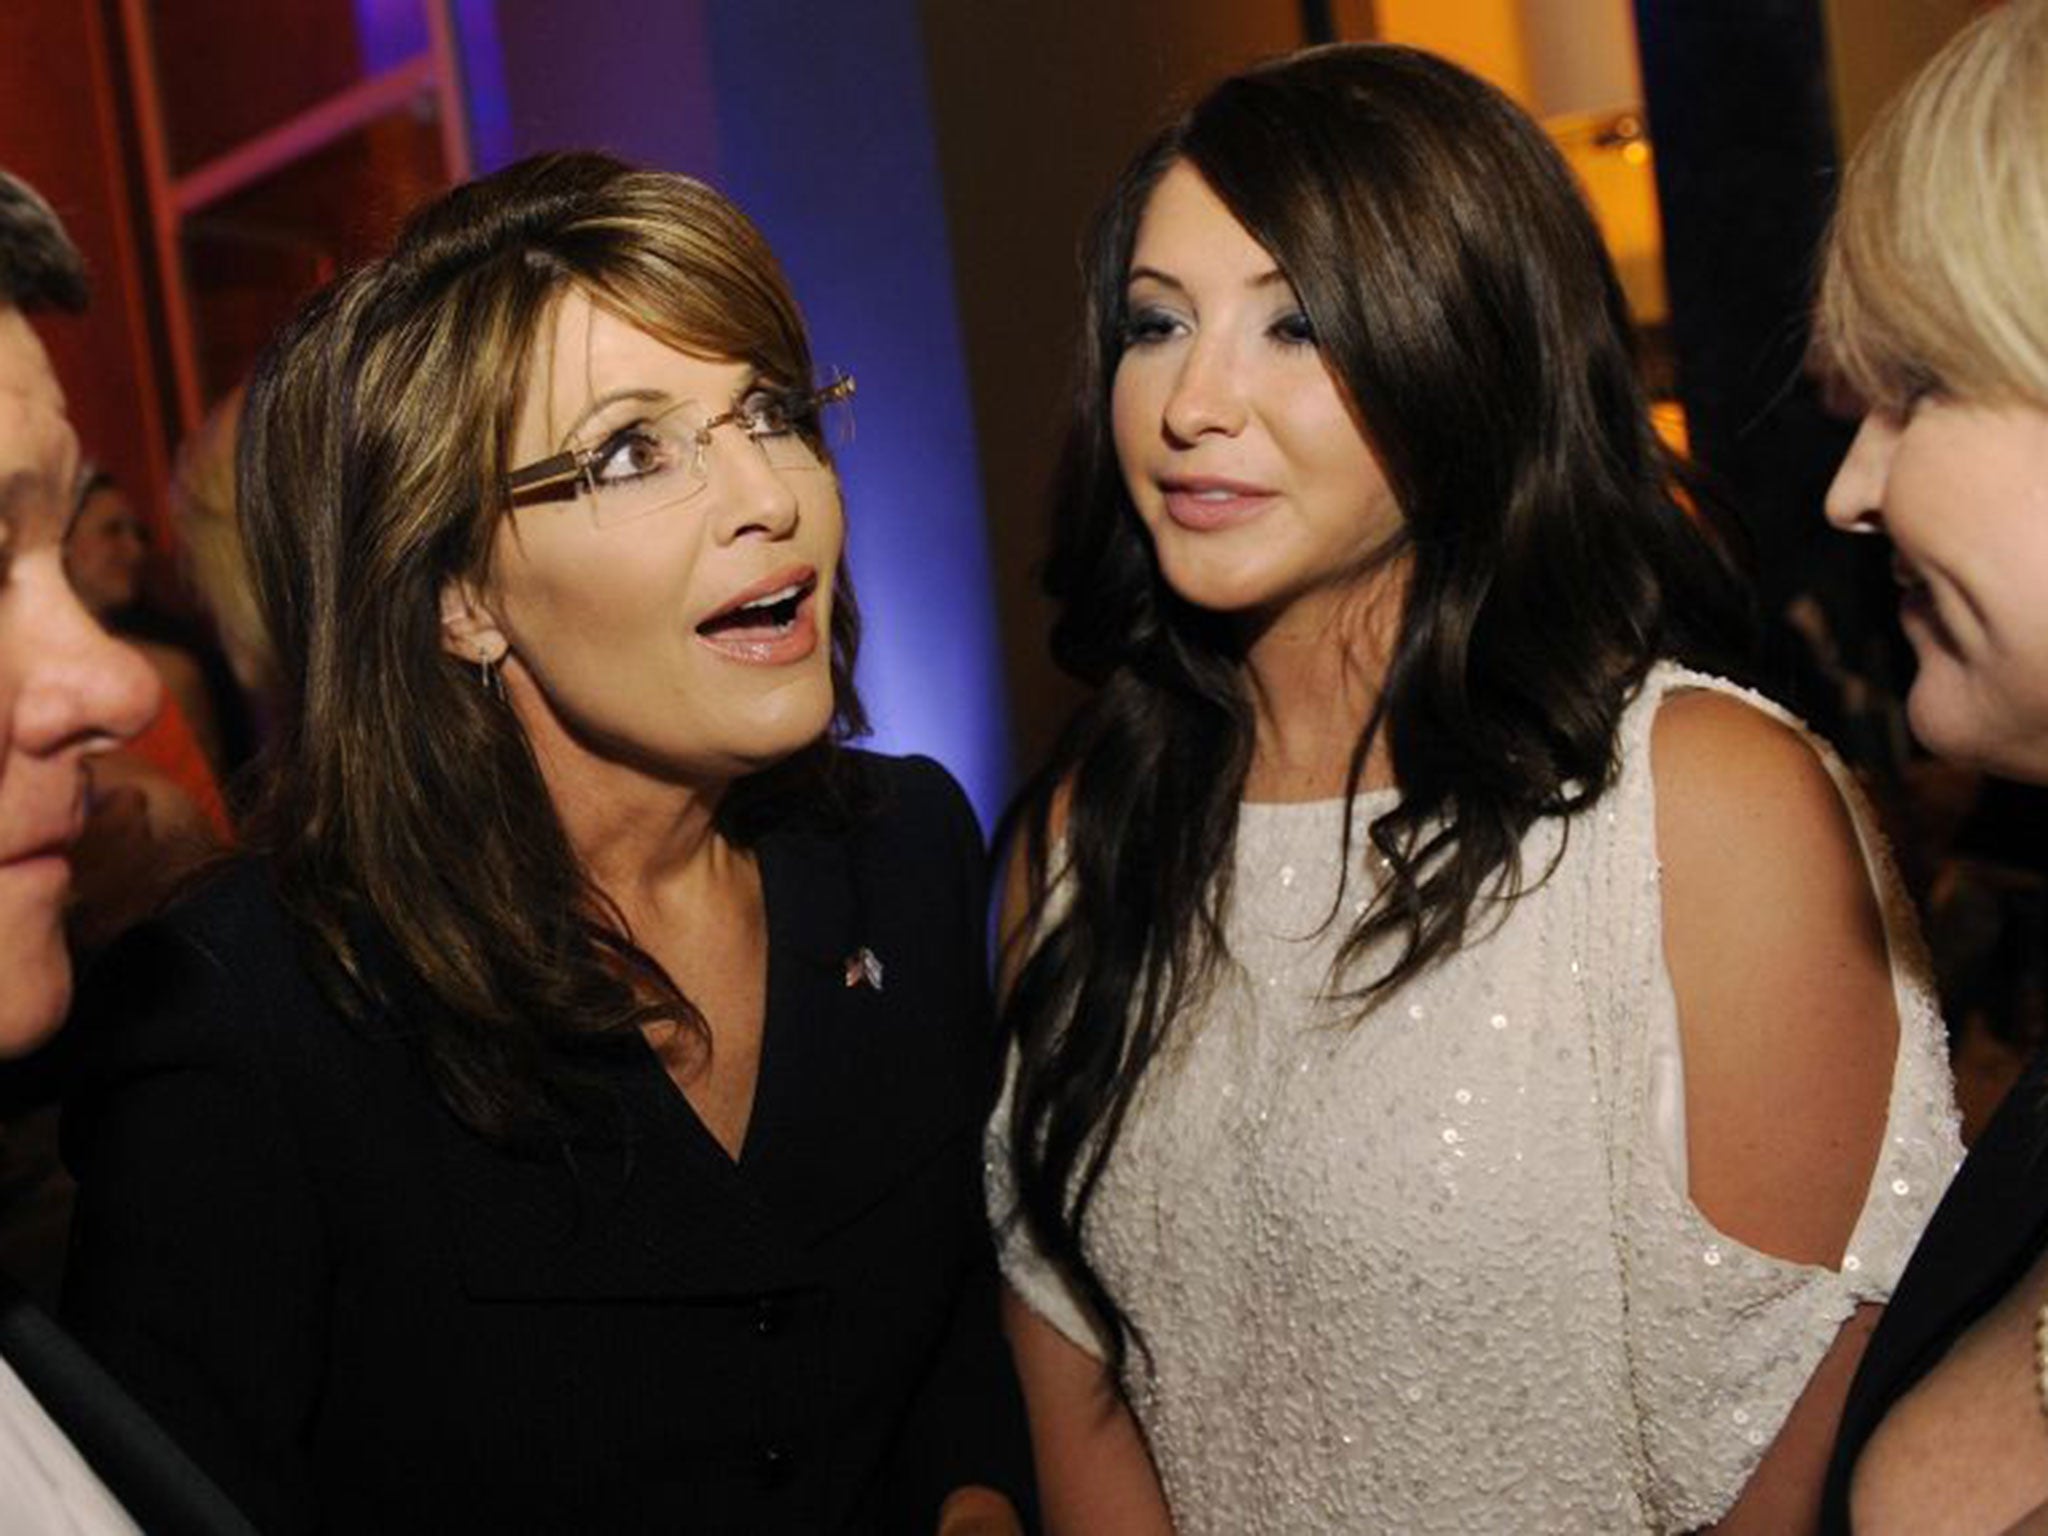 Former Governor of Alaska Sarah Palin, left, with her daughter, Bristol